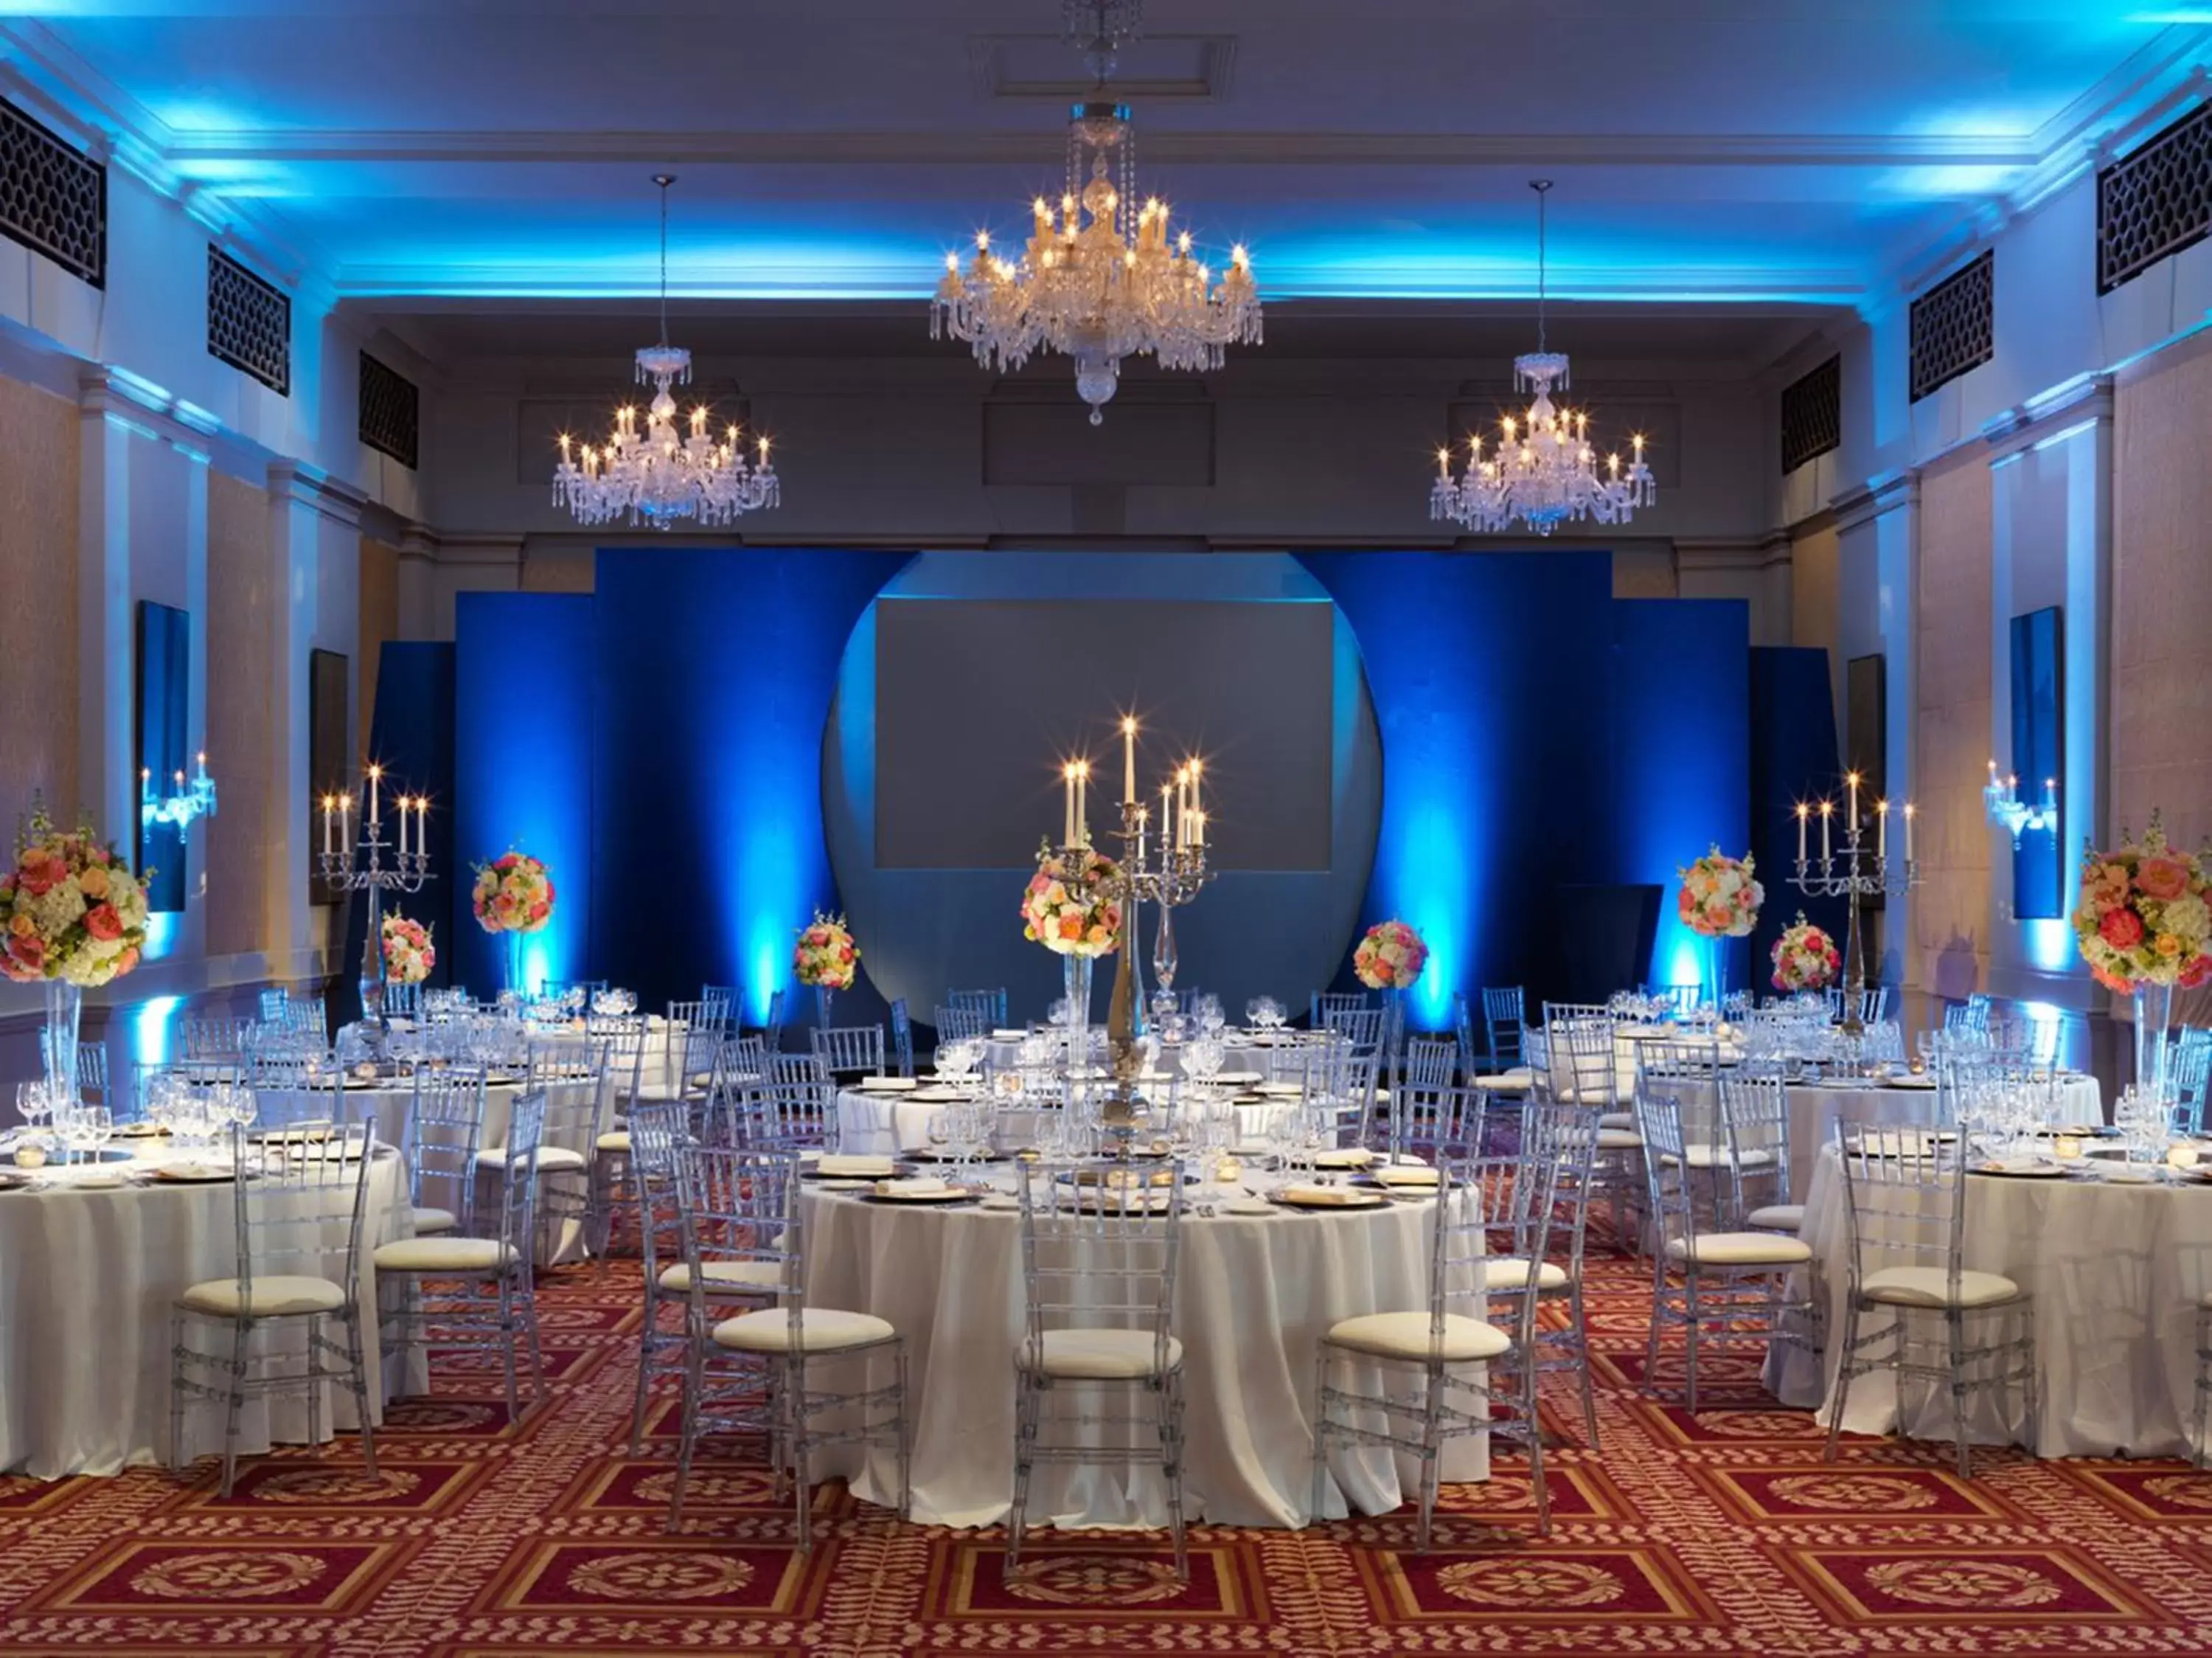 Banquet/Function facilities, Banquet Facilities in The Bloomsbury Hotel